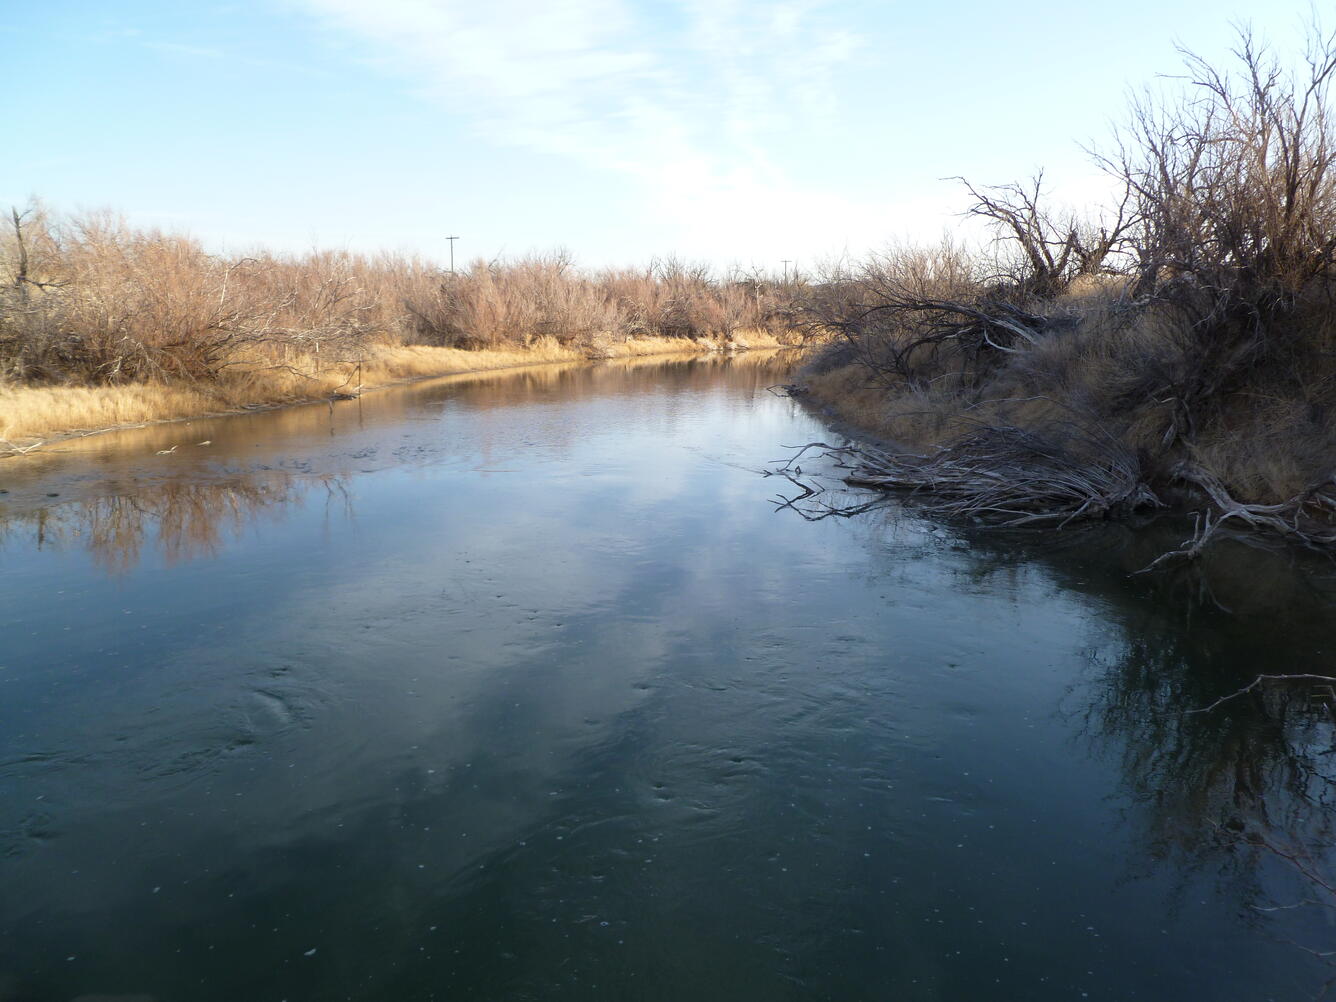 Pecos River at low water crossing ner Hwy 349 below Iraan, TX - downstream view